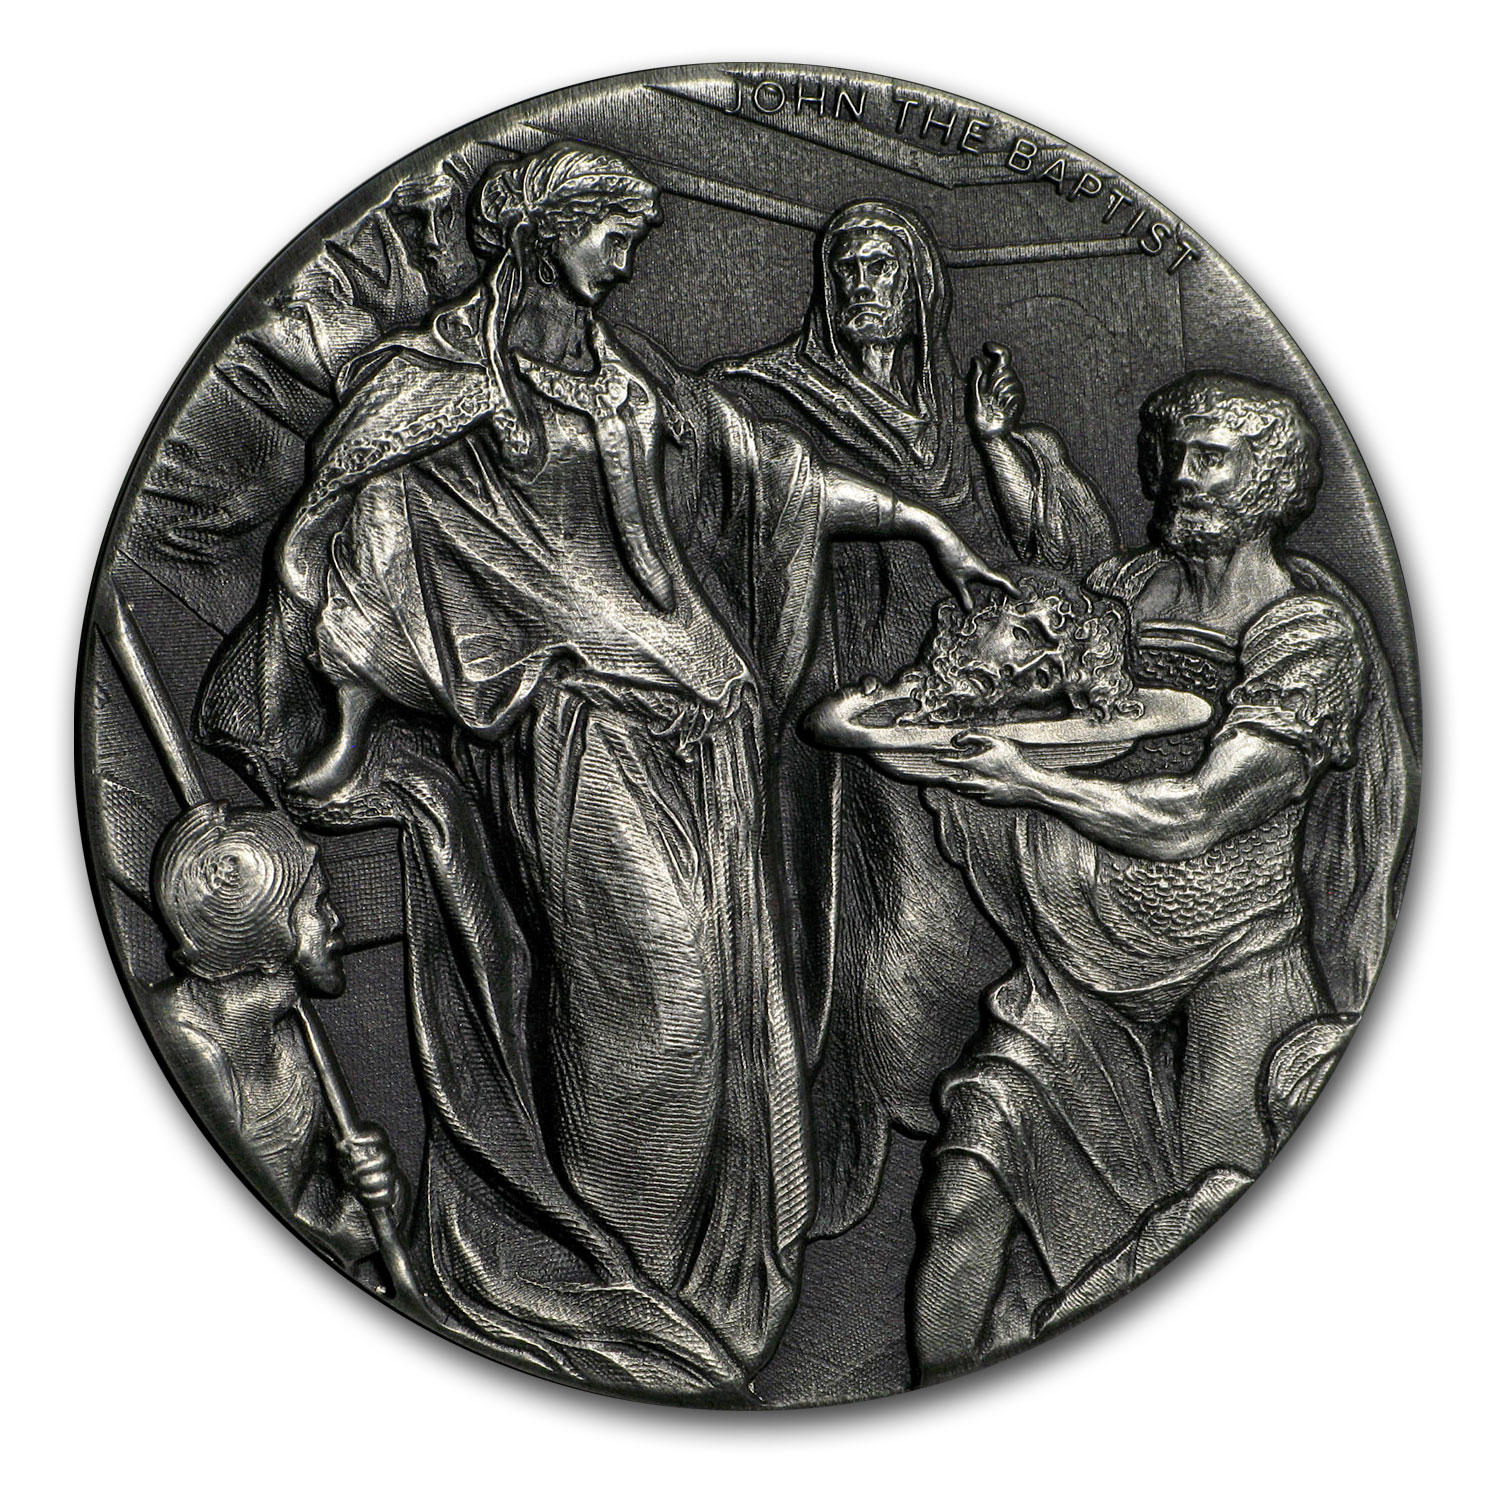 Buy 2018 2 oz Silver Coin - Biblical Series (John the Baptist)